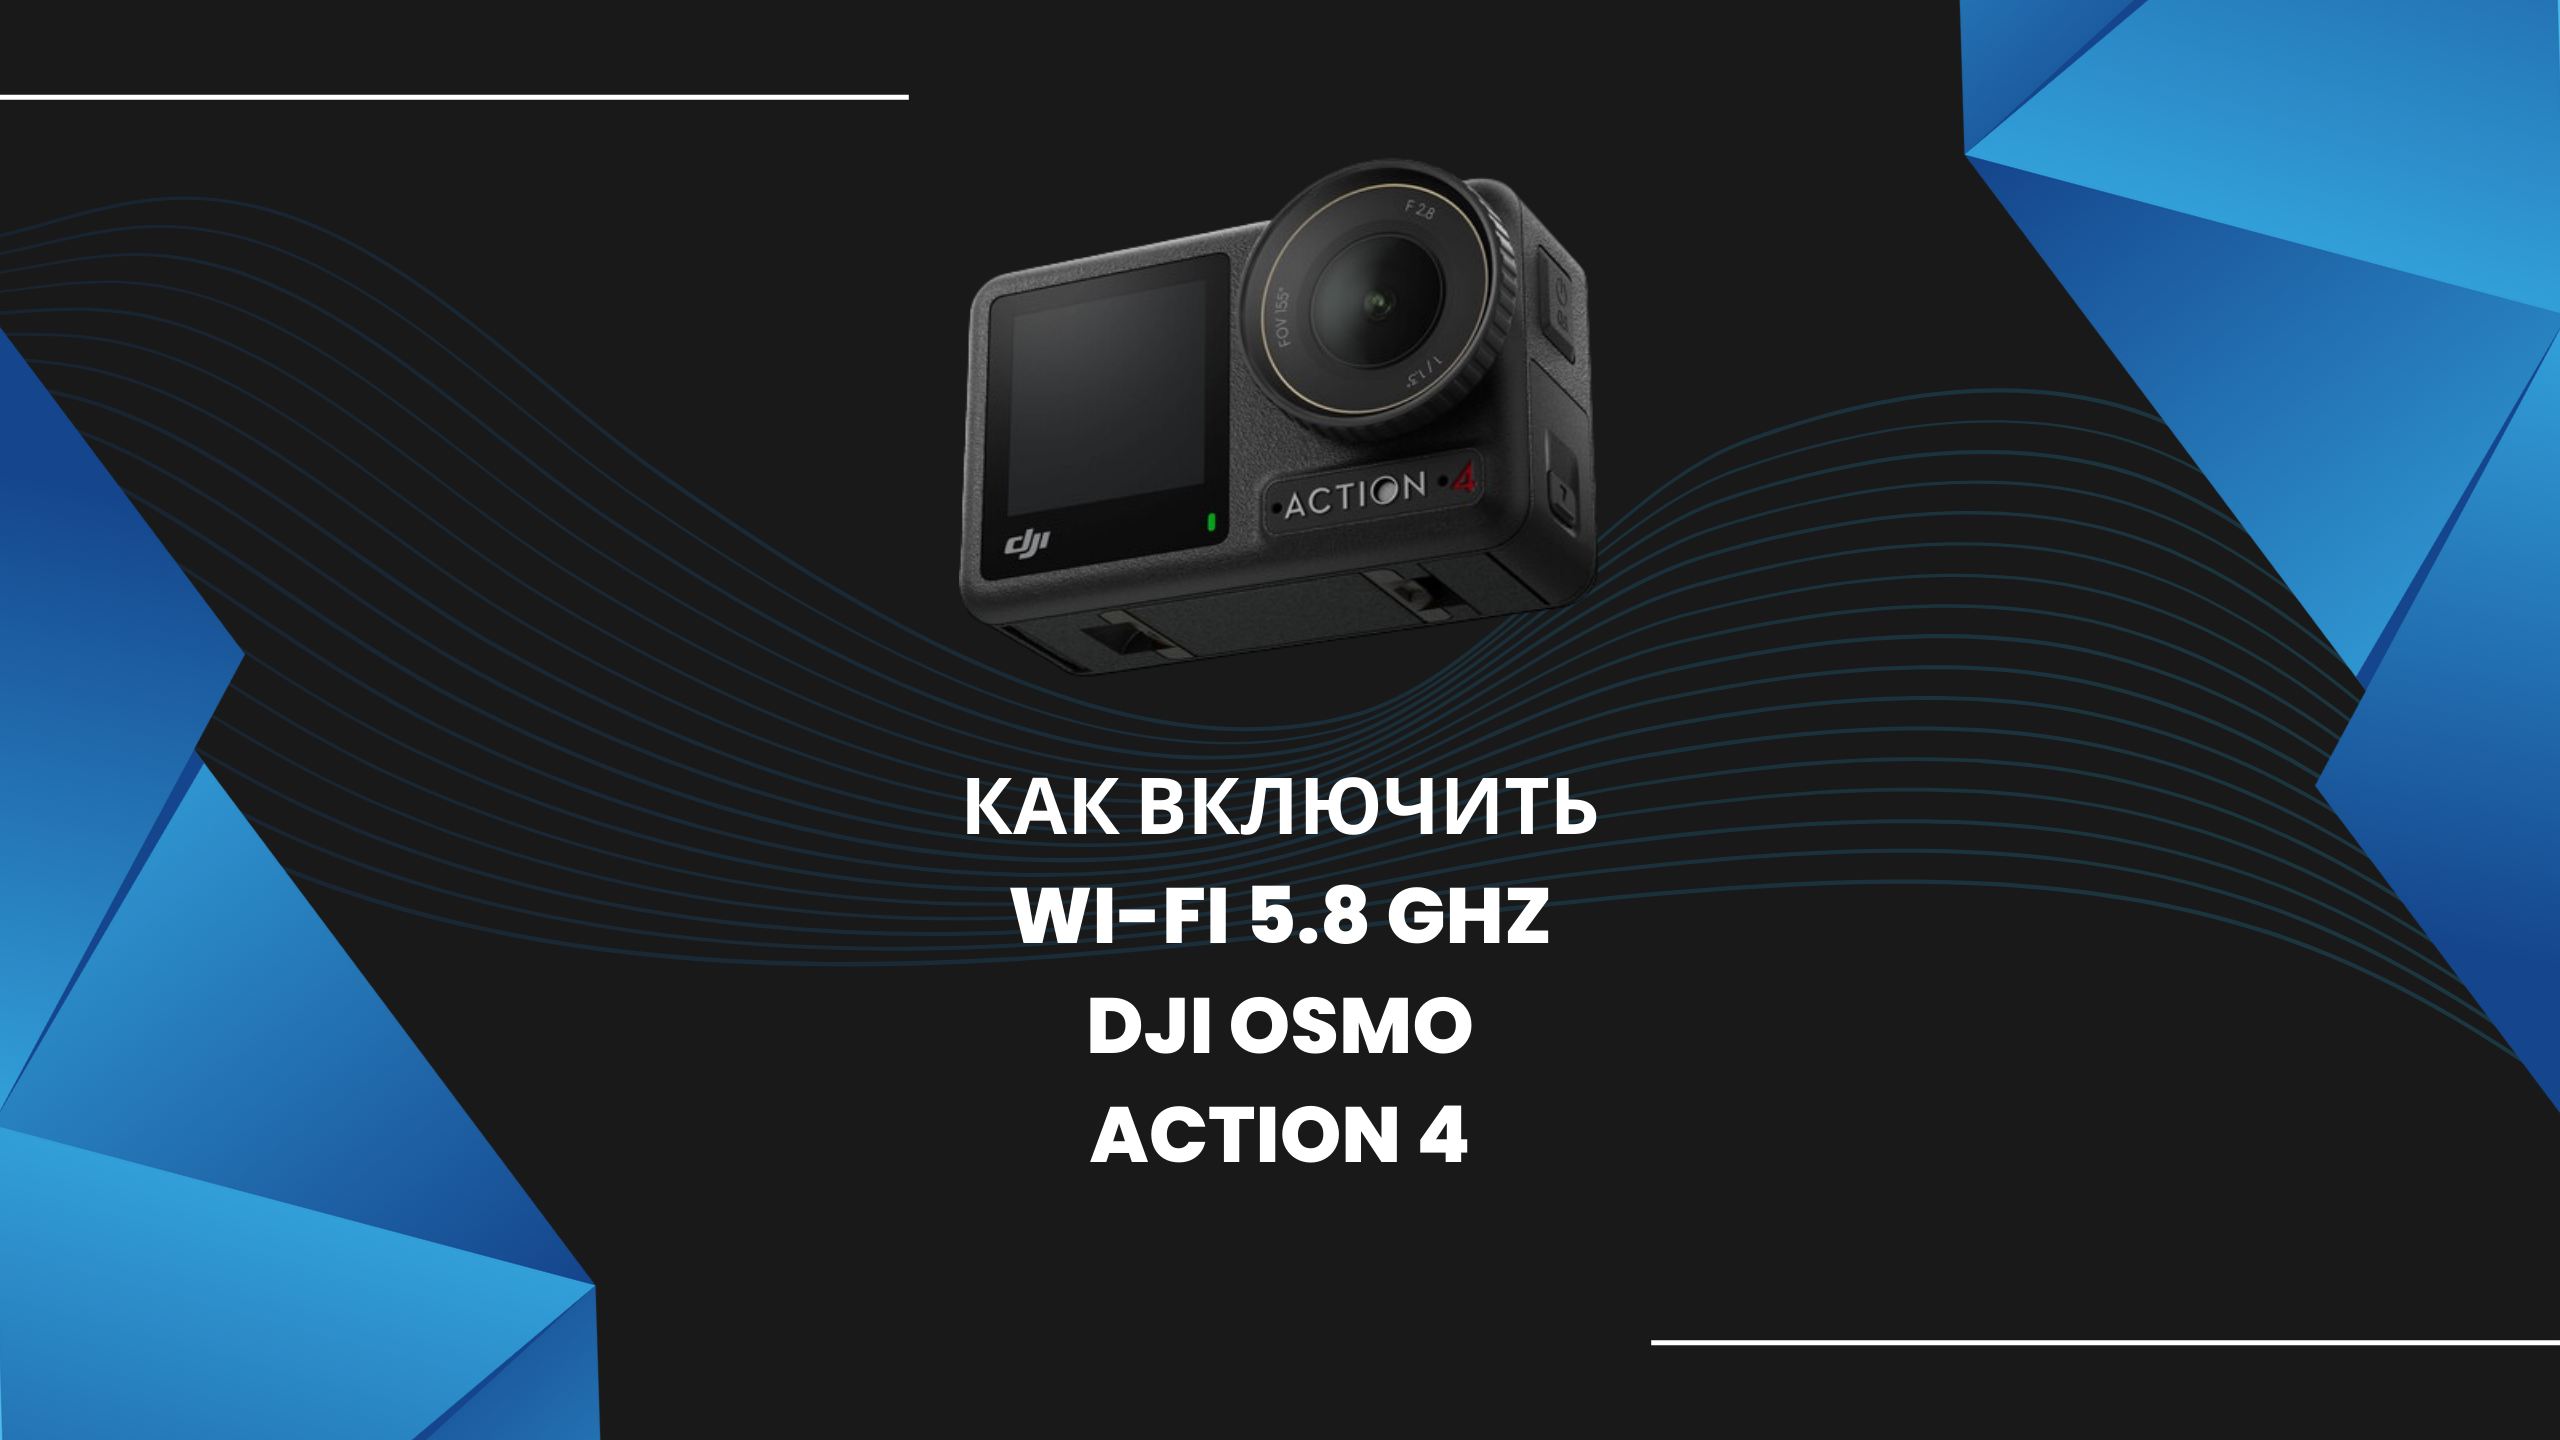 Как включить Wi-Fi 5.8 (5Ghz) на экшн камере DJI OSMO Action 4 в РФ на iOS (iPhone)